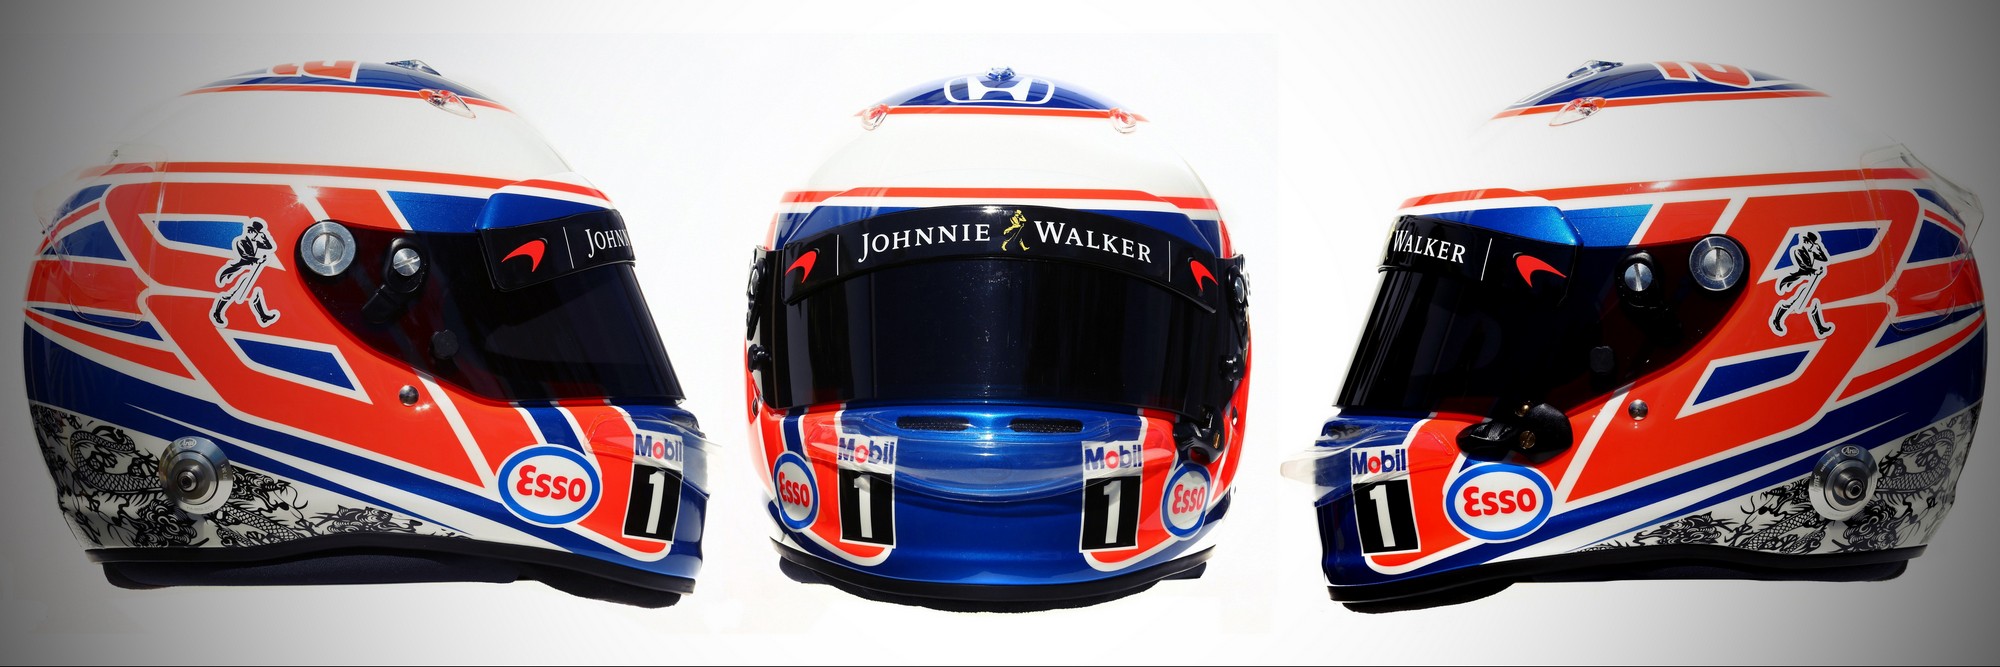 Шлем Дженсона Баттона на сезон 2016 года | 2016 helmet of Jenson Button